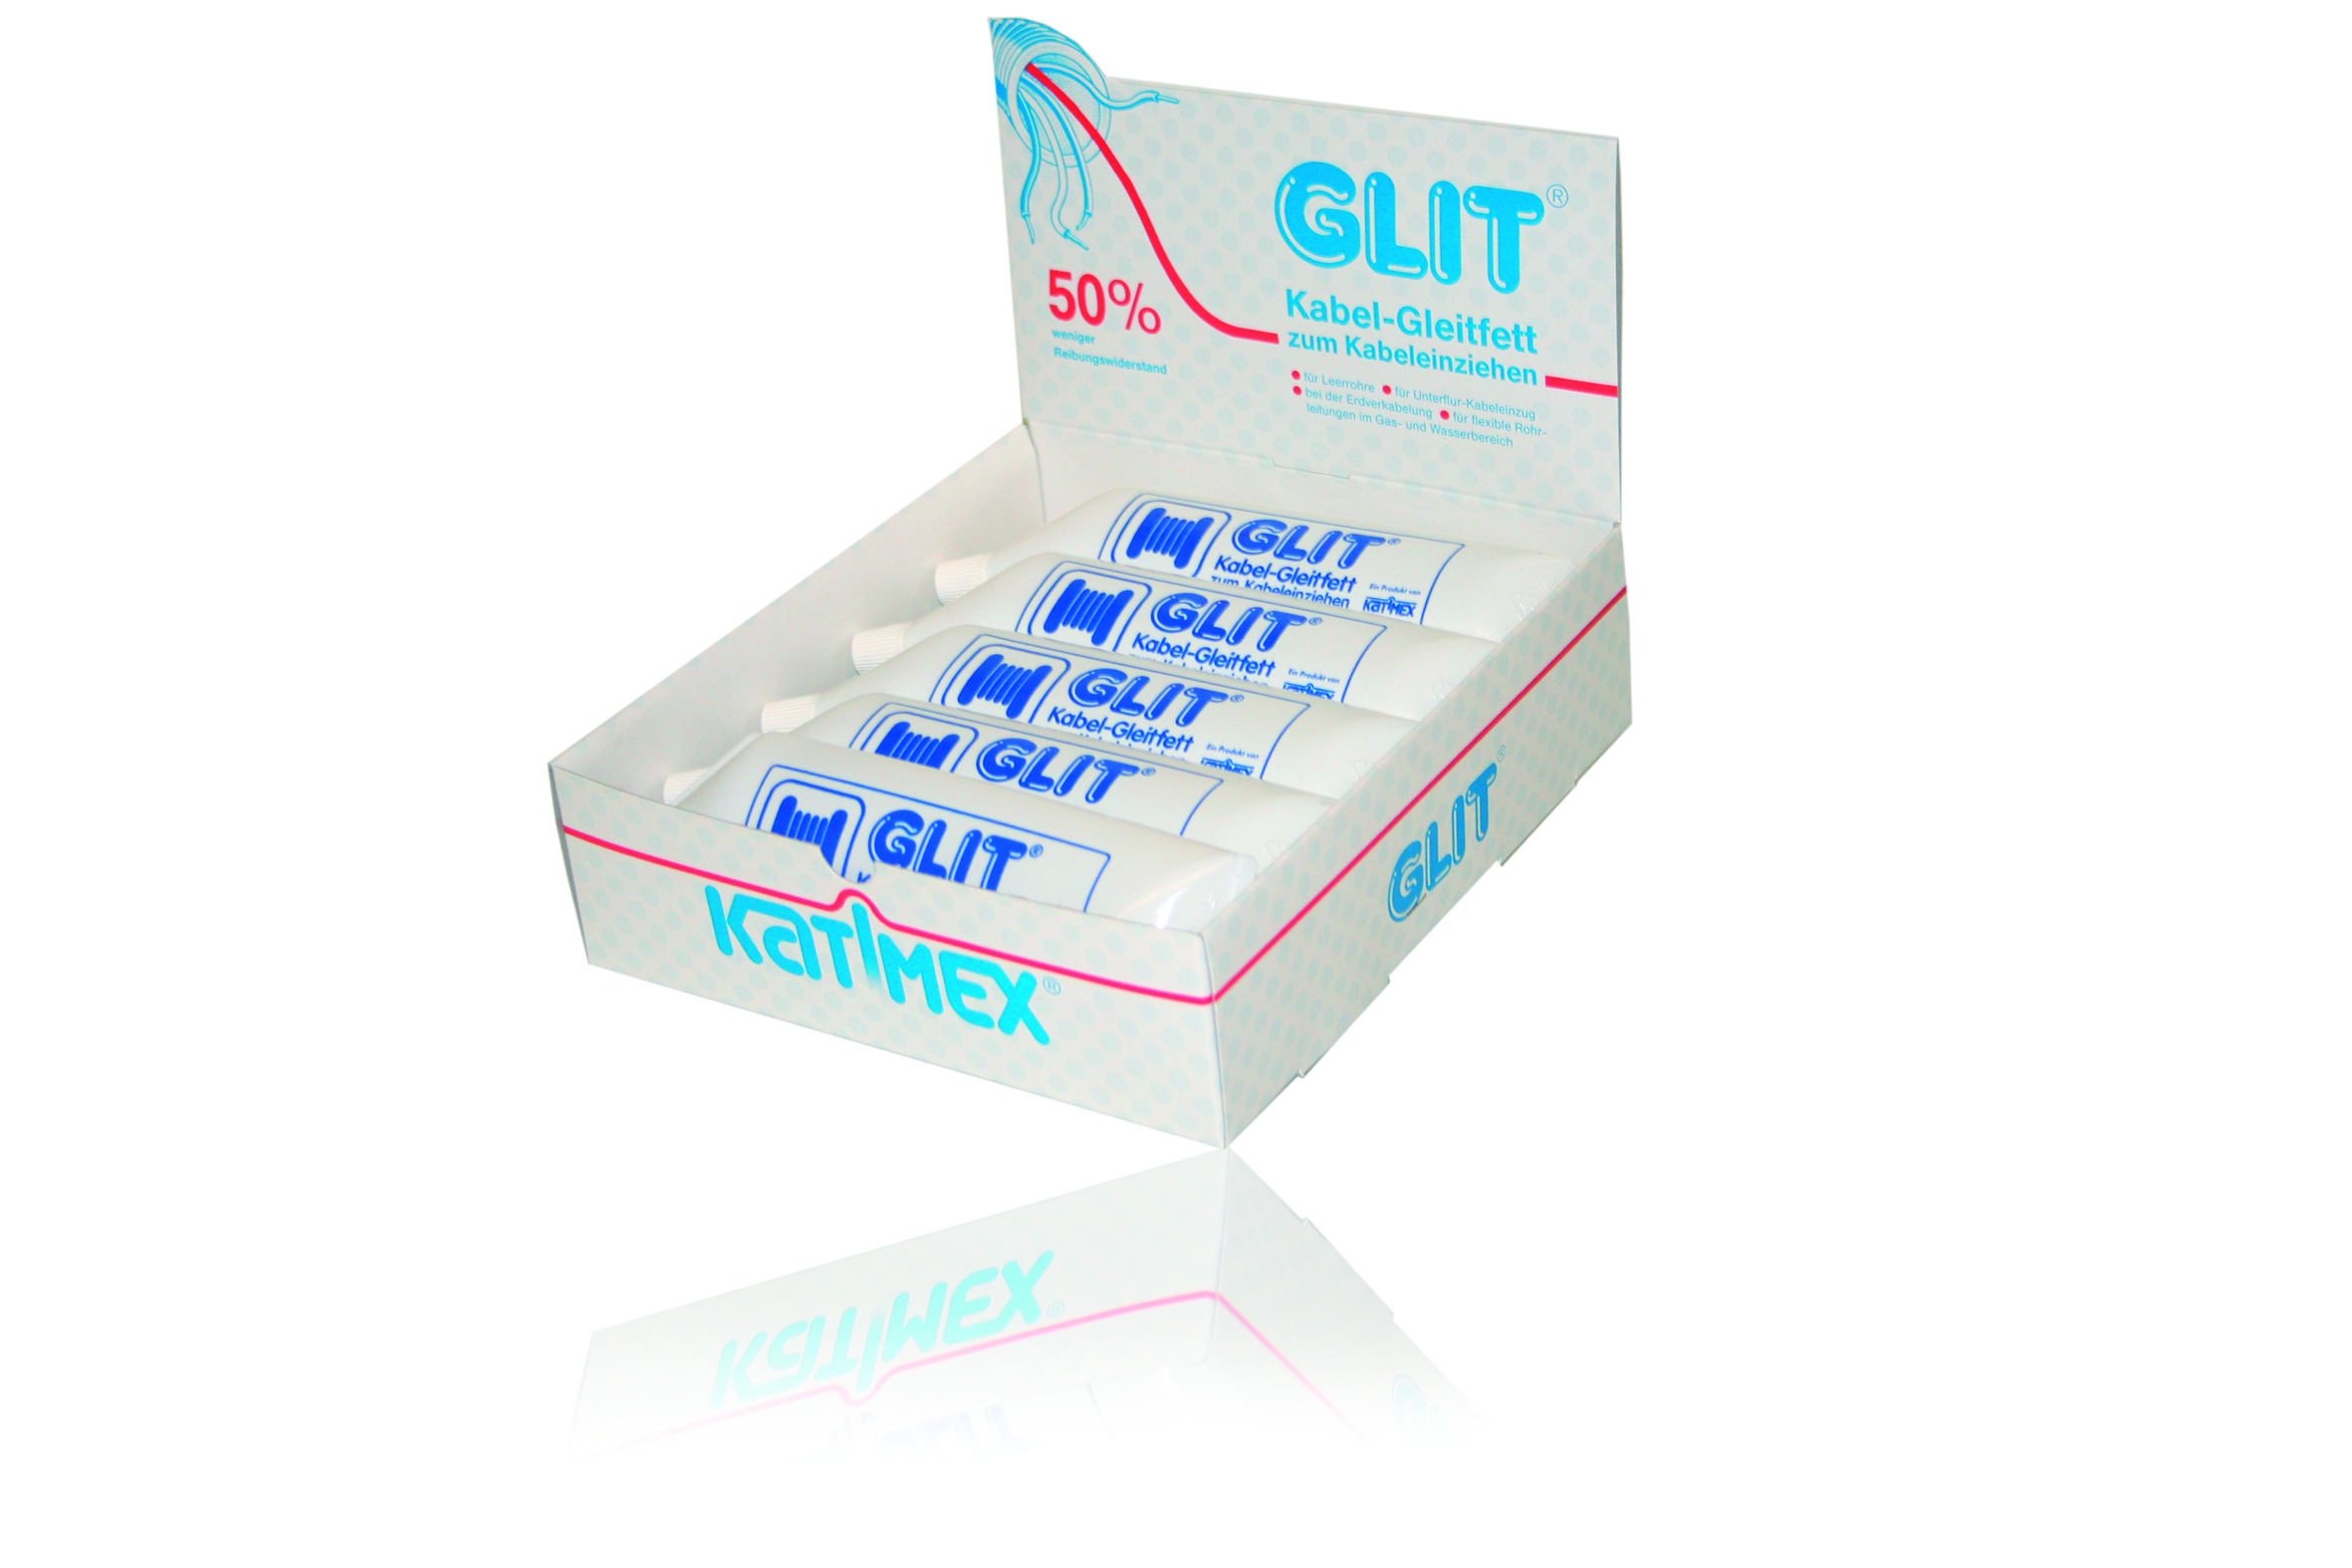 Glit-Displaykarton